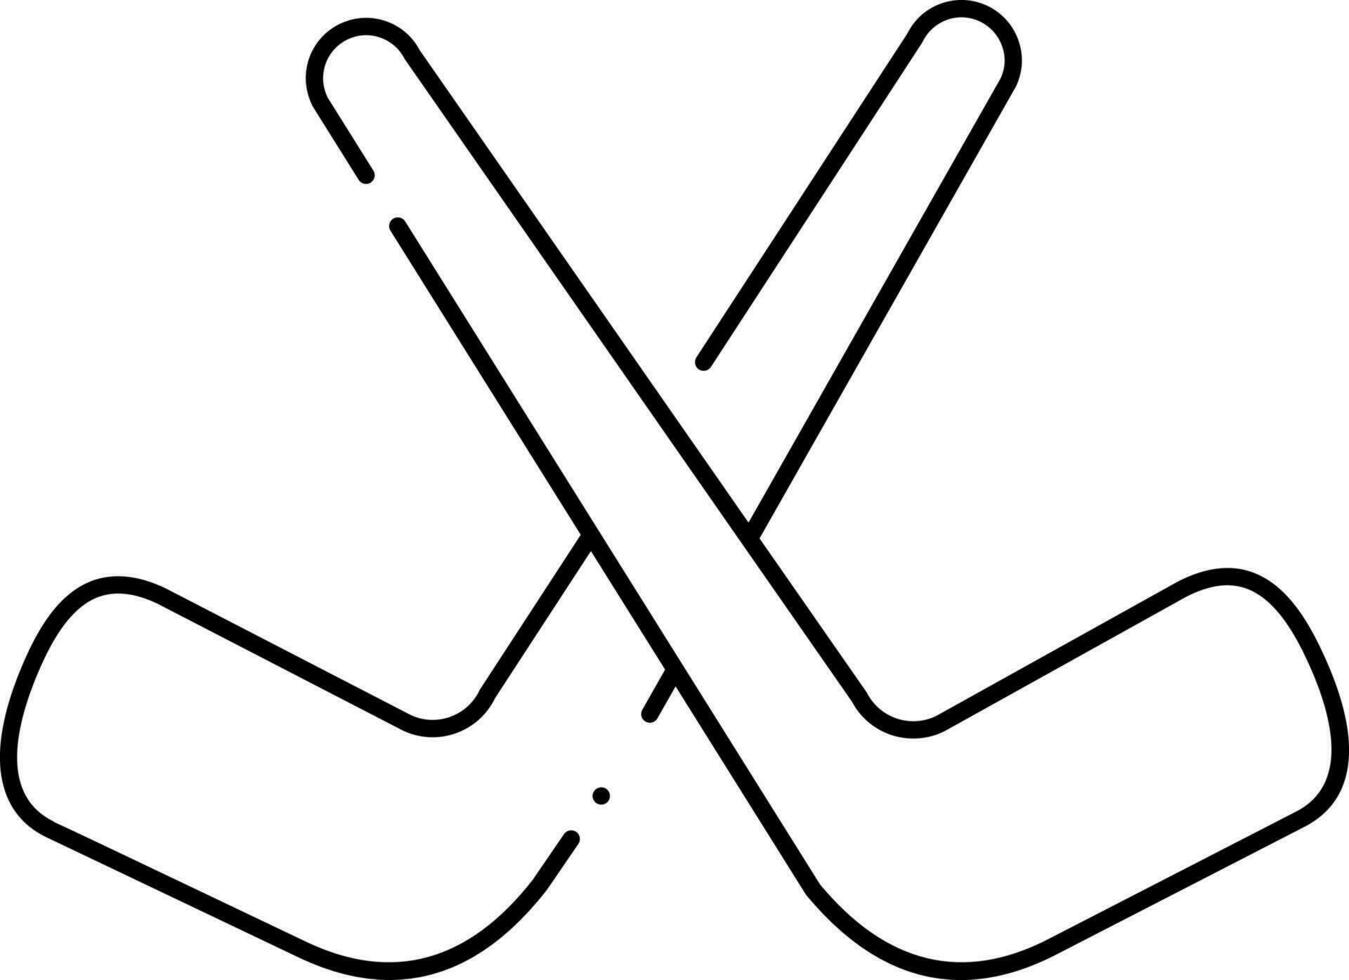 Black Thin Line Art Of Cross Hockey Icon. vector